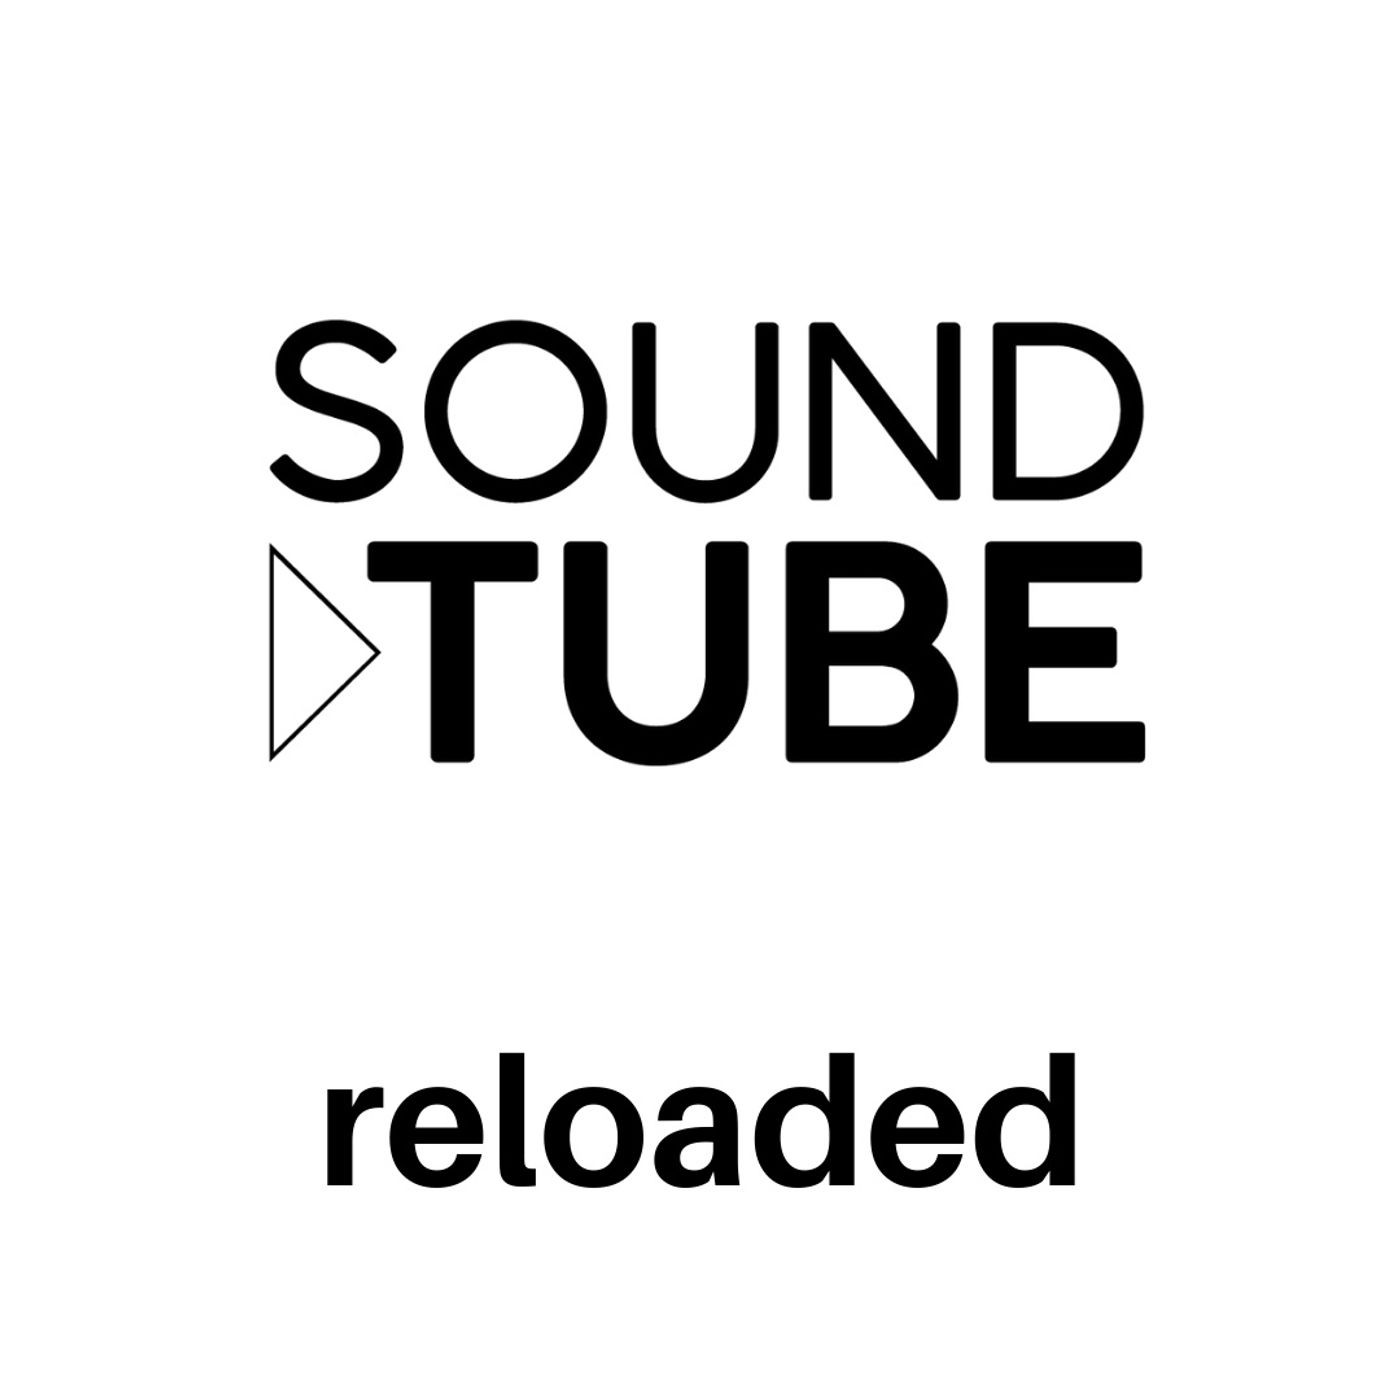 SoundTube reloaded